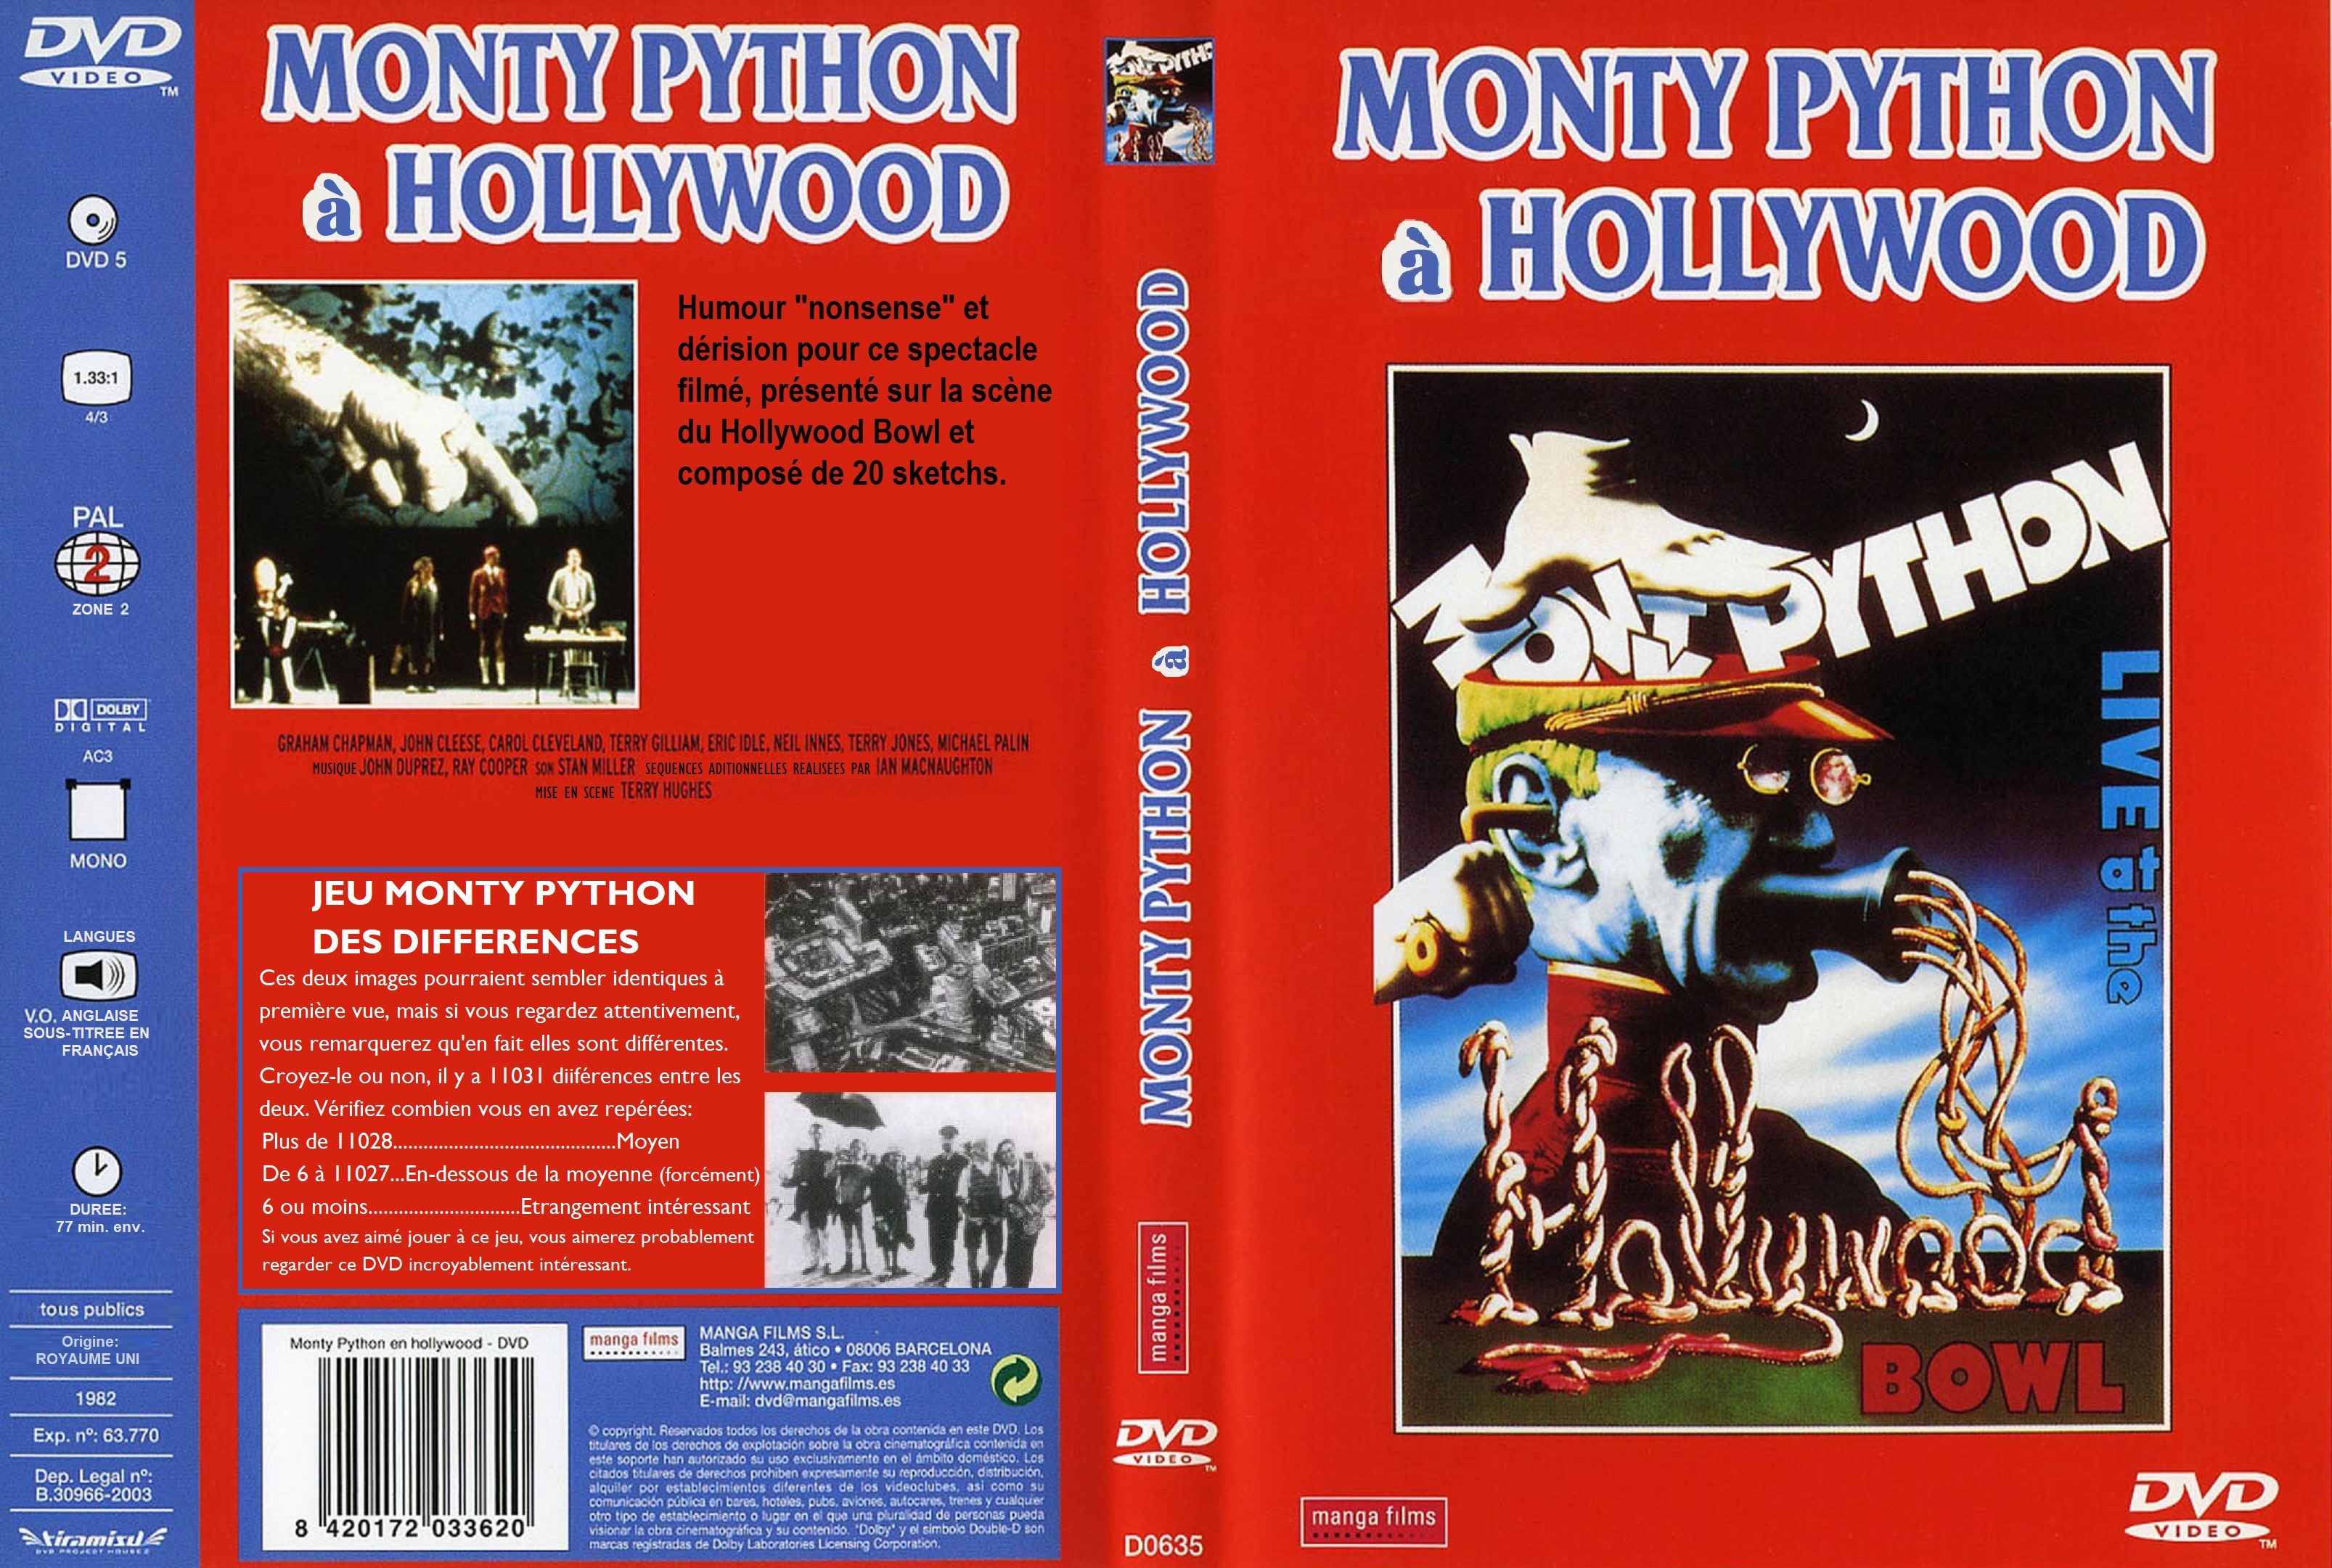 Jaquette DVD Monty Python  Hollywood custom